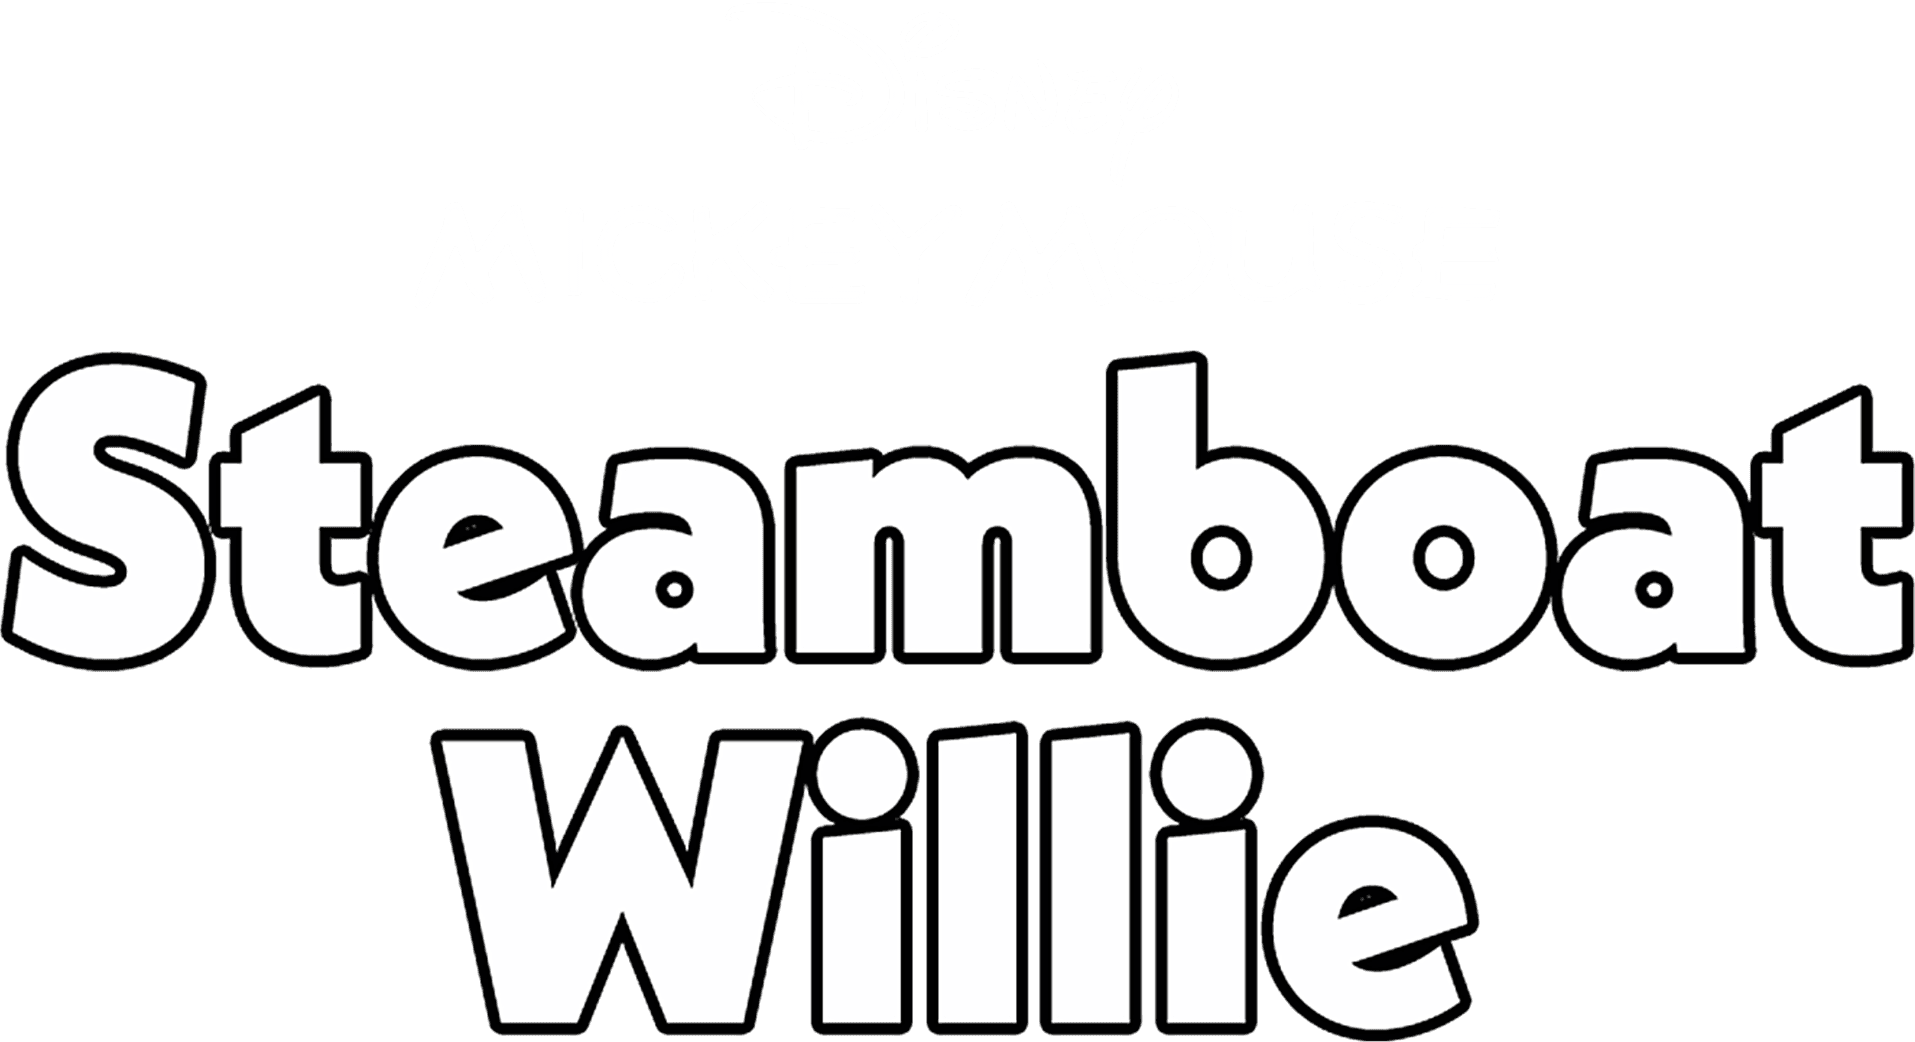 Steamboat Willie logo